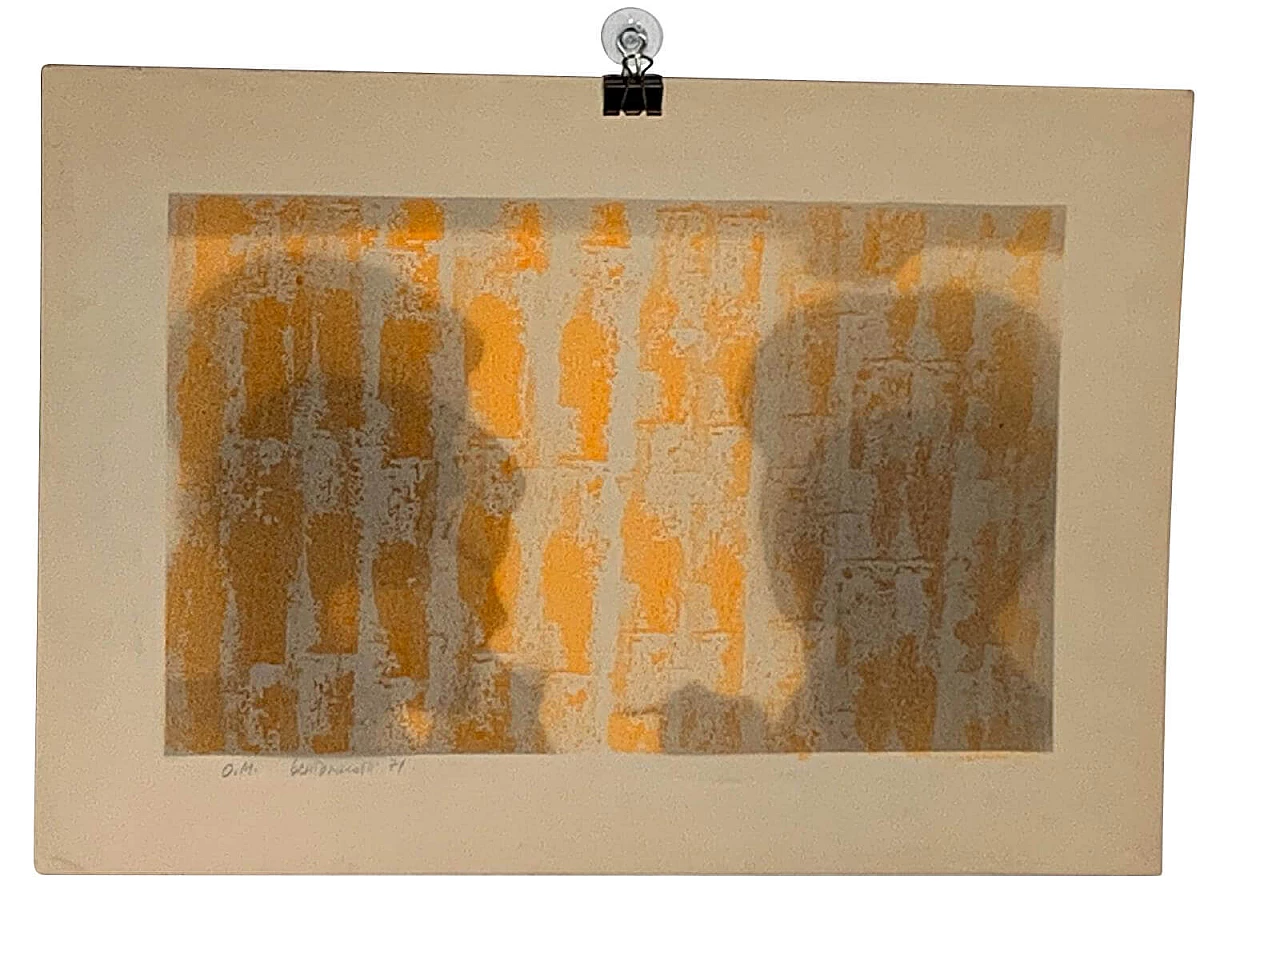 Lithograph by Berto Ravotti "Human Shadows in Conversation", 1971 1095298